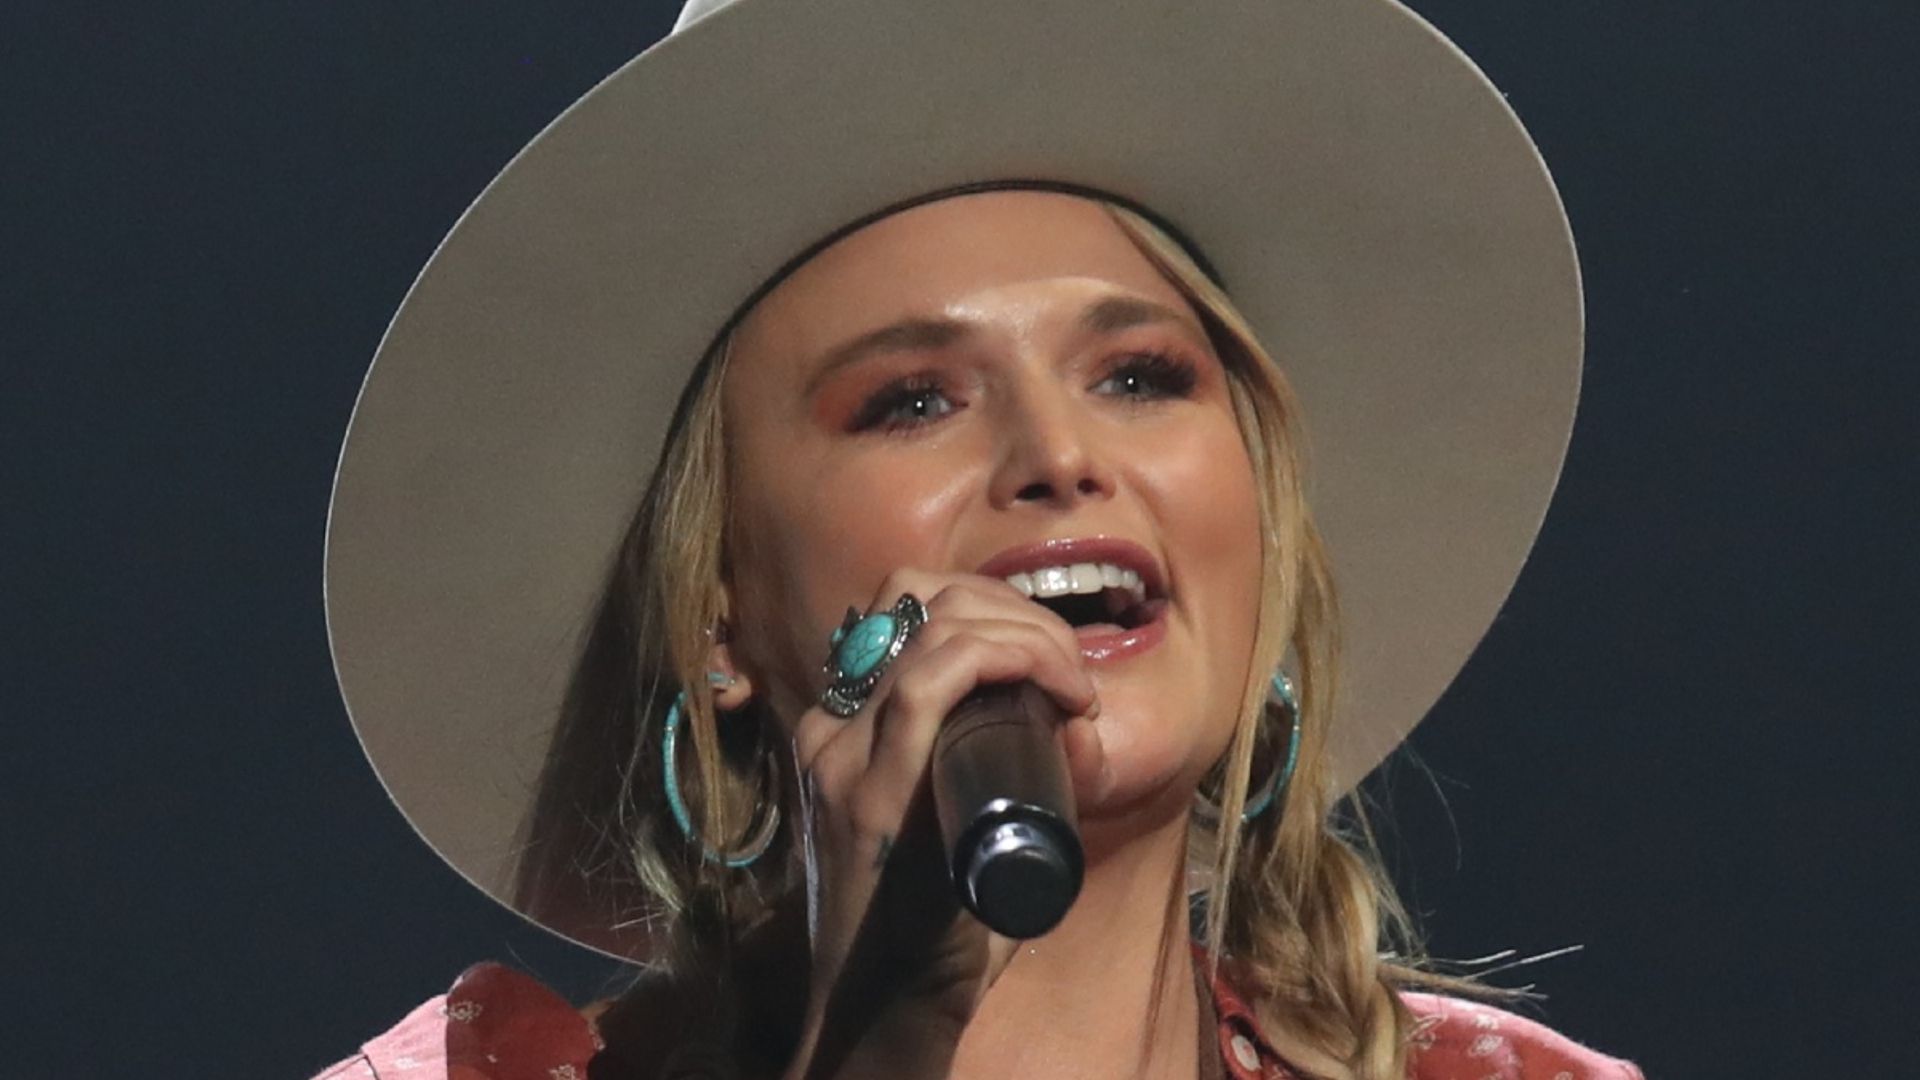 Miranda Lambert shares surprising news with fans ahead of CMA